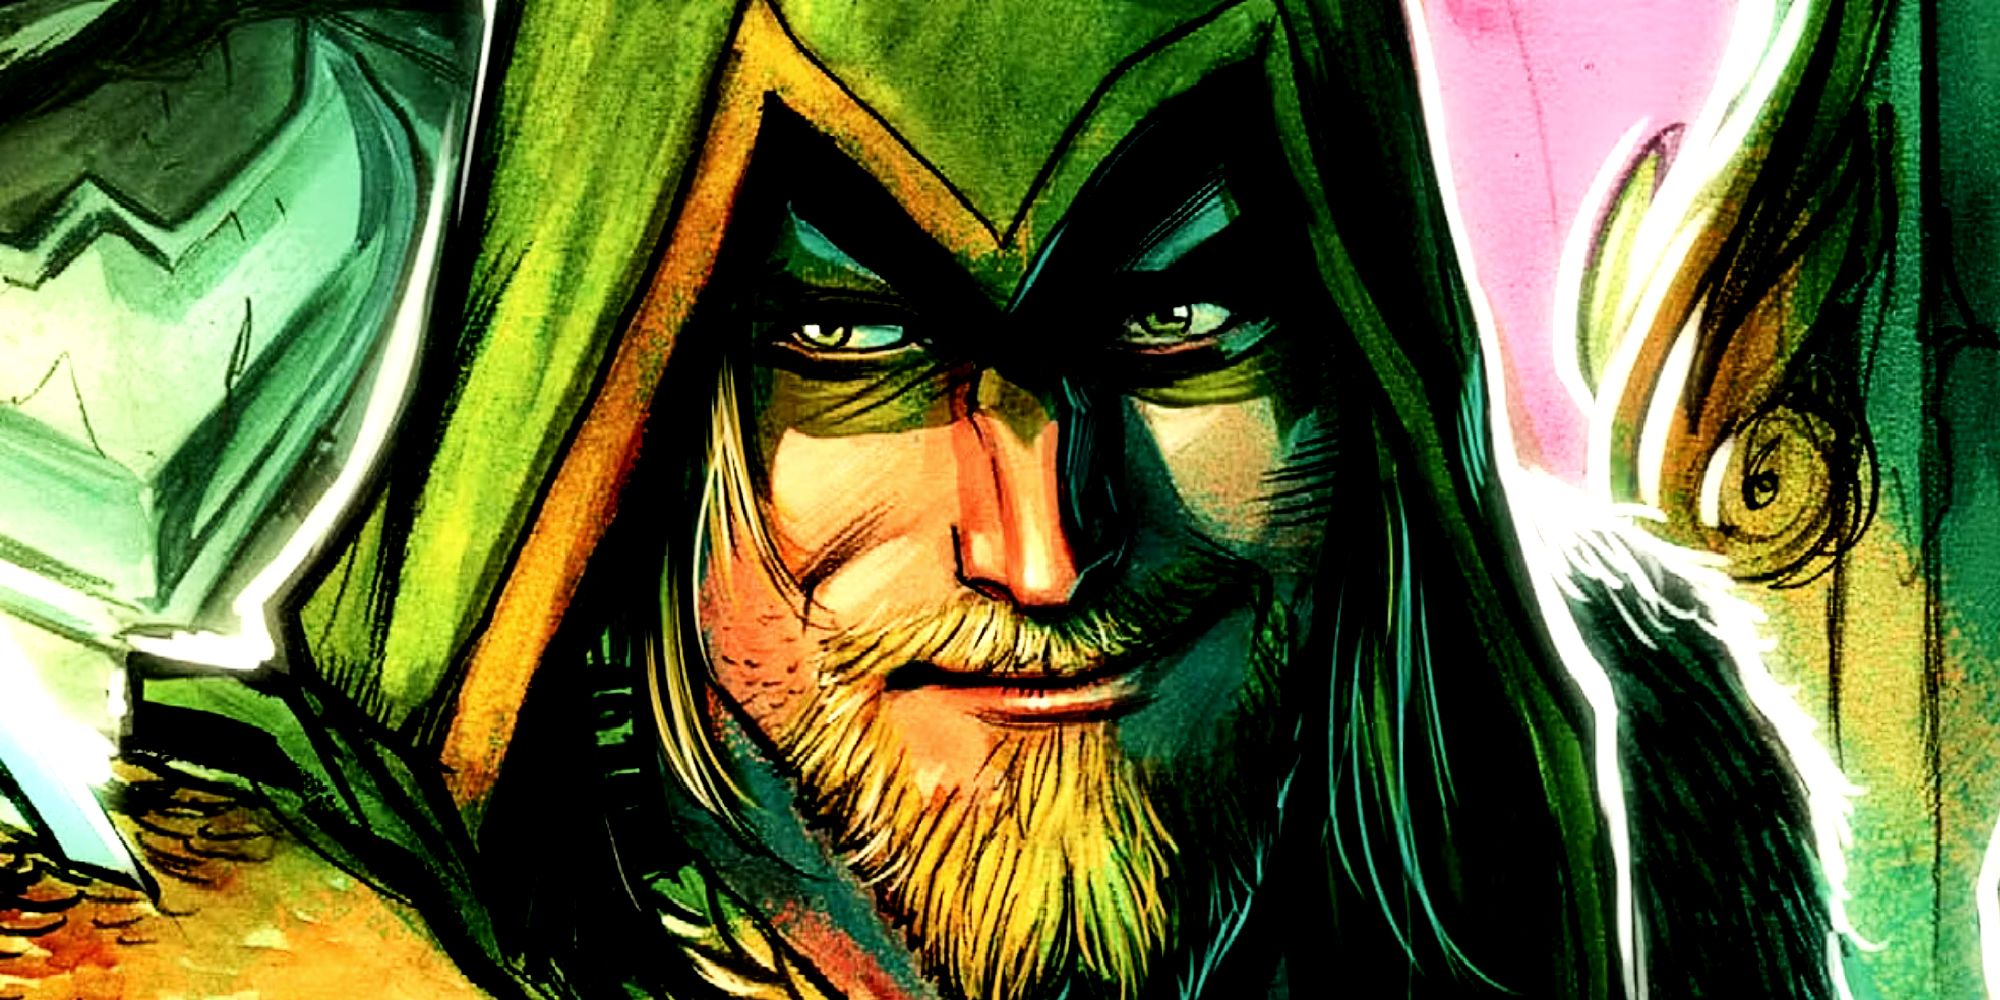 Olilver Queen a.k.a. Green Arrow in DC Comics